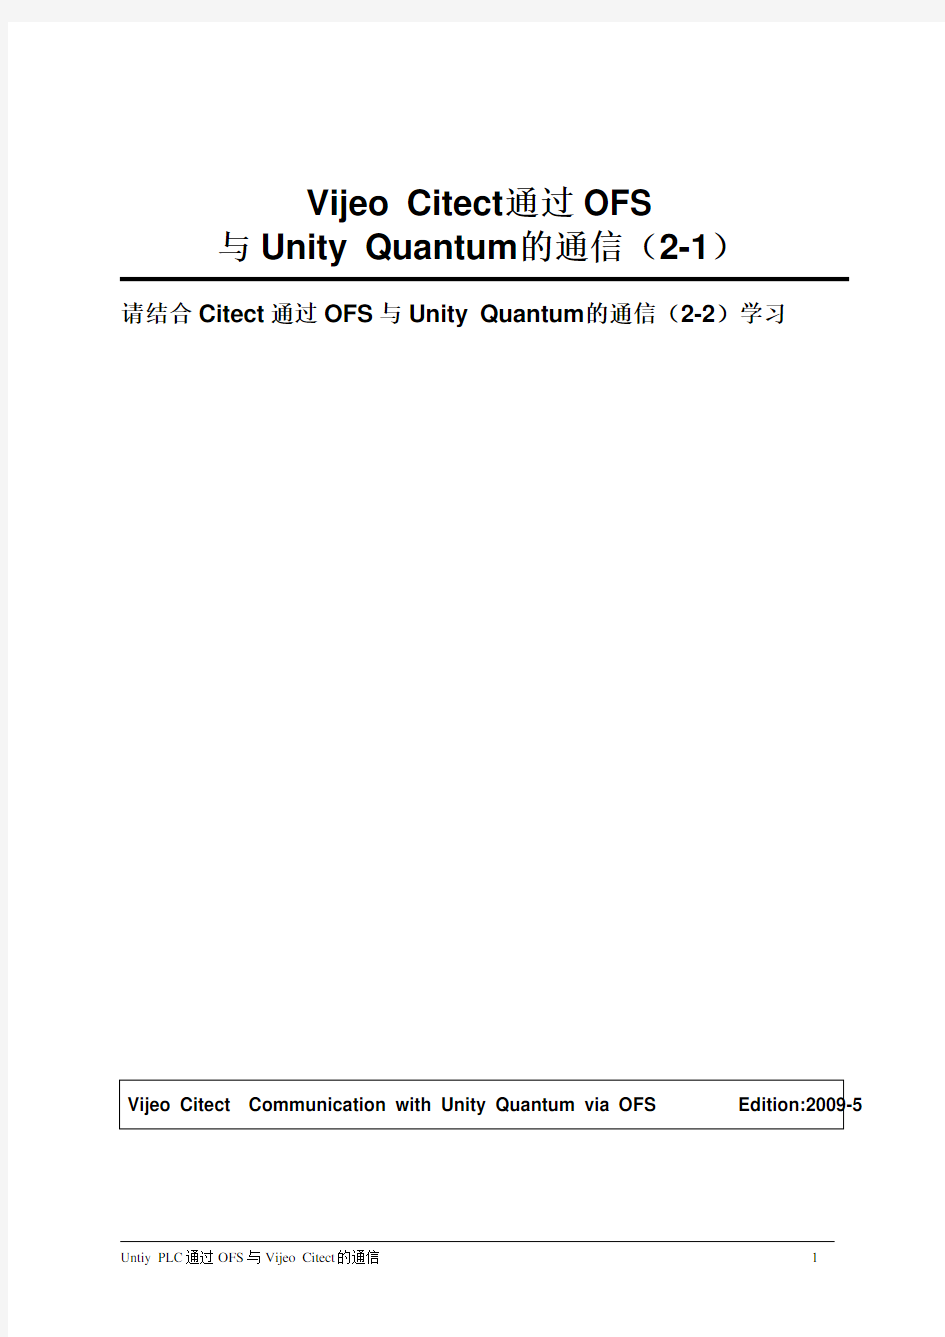 Citect通过OFS与Unity Quantum的通信 (2-1)